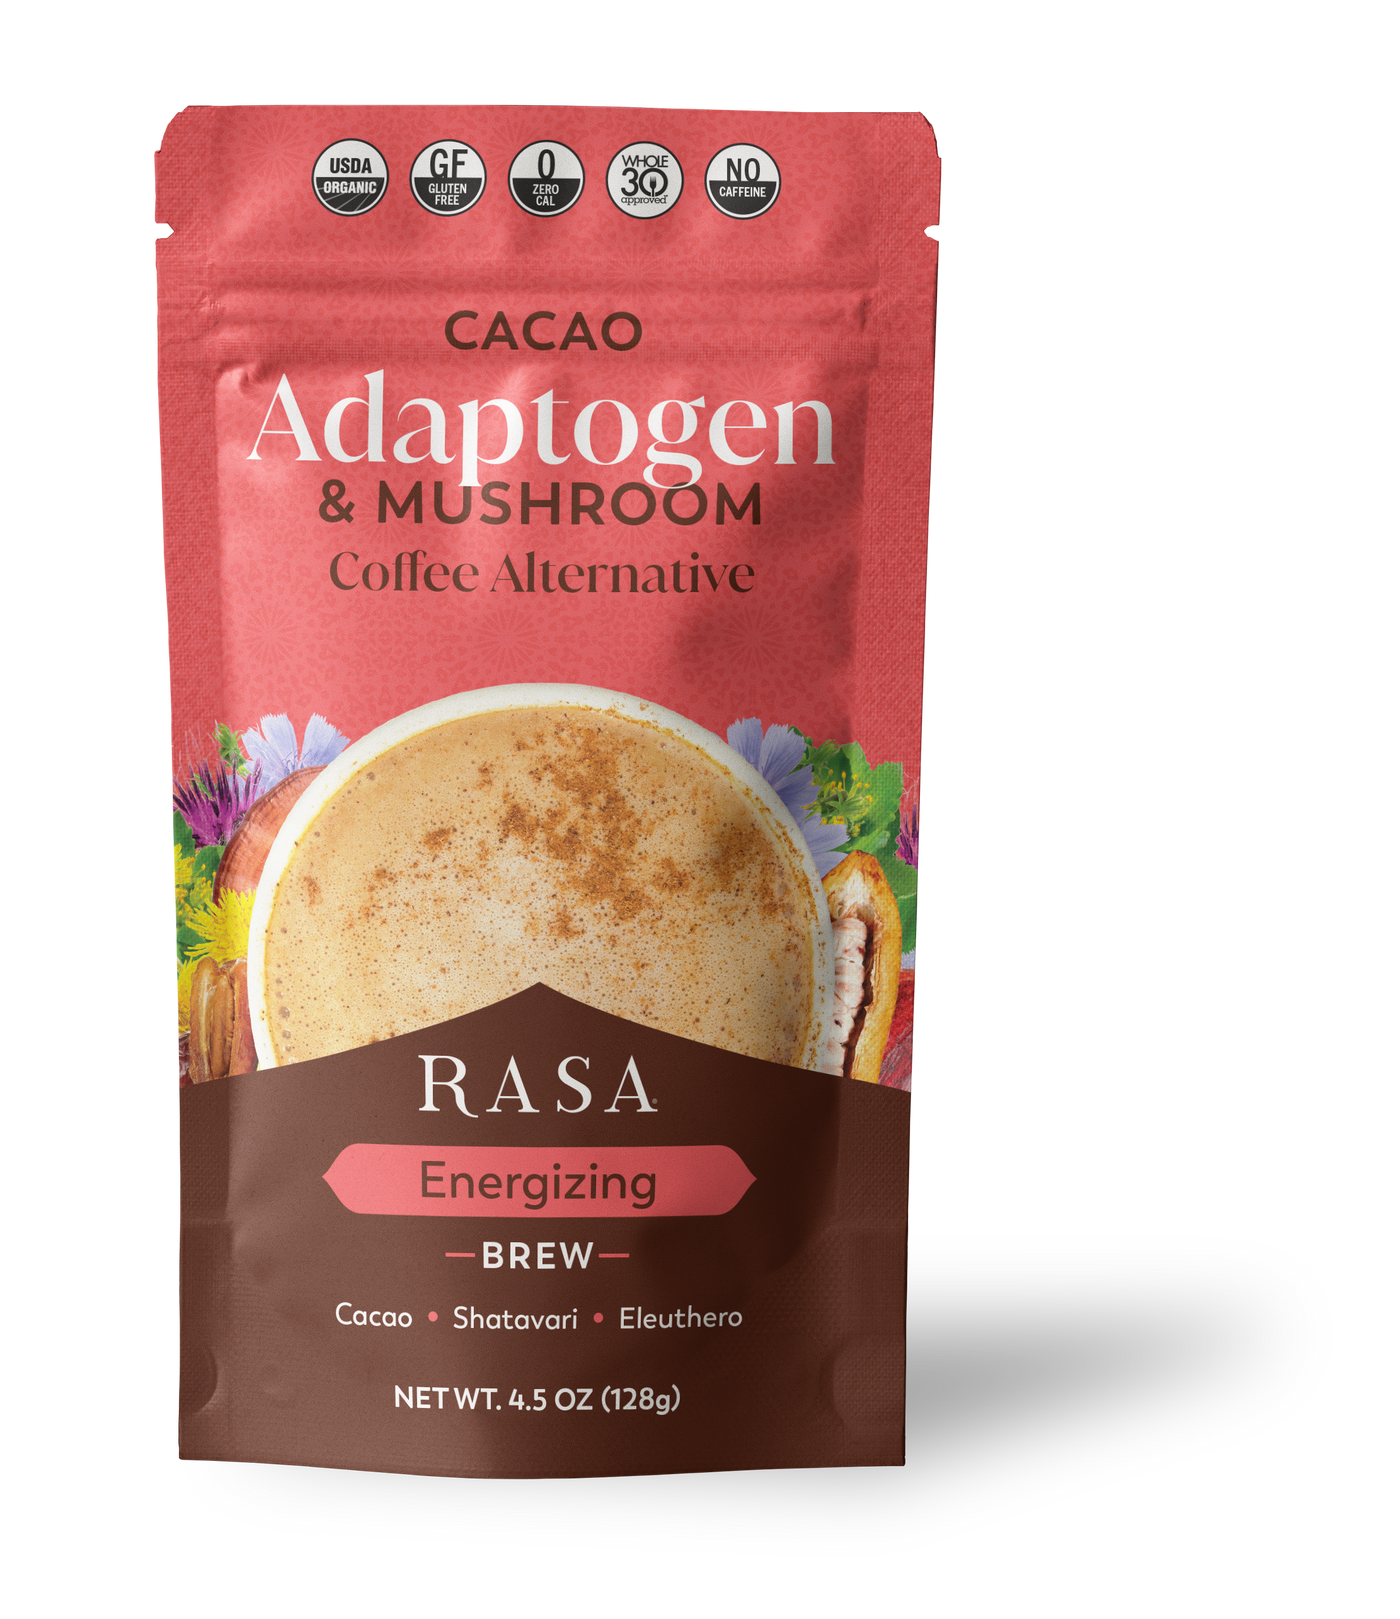 Cacao Adaptogen & Mushroom Coffee Alternative